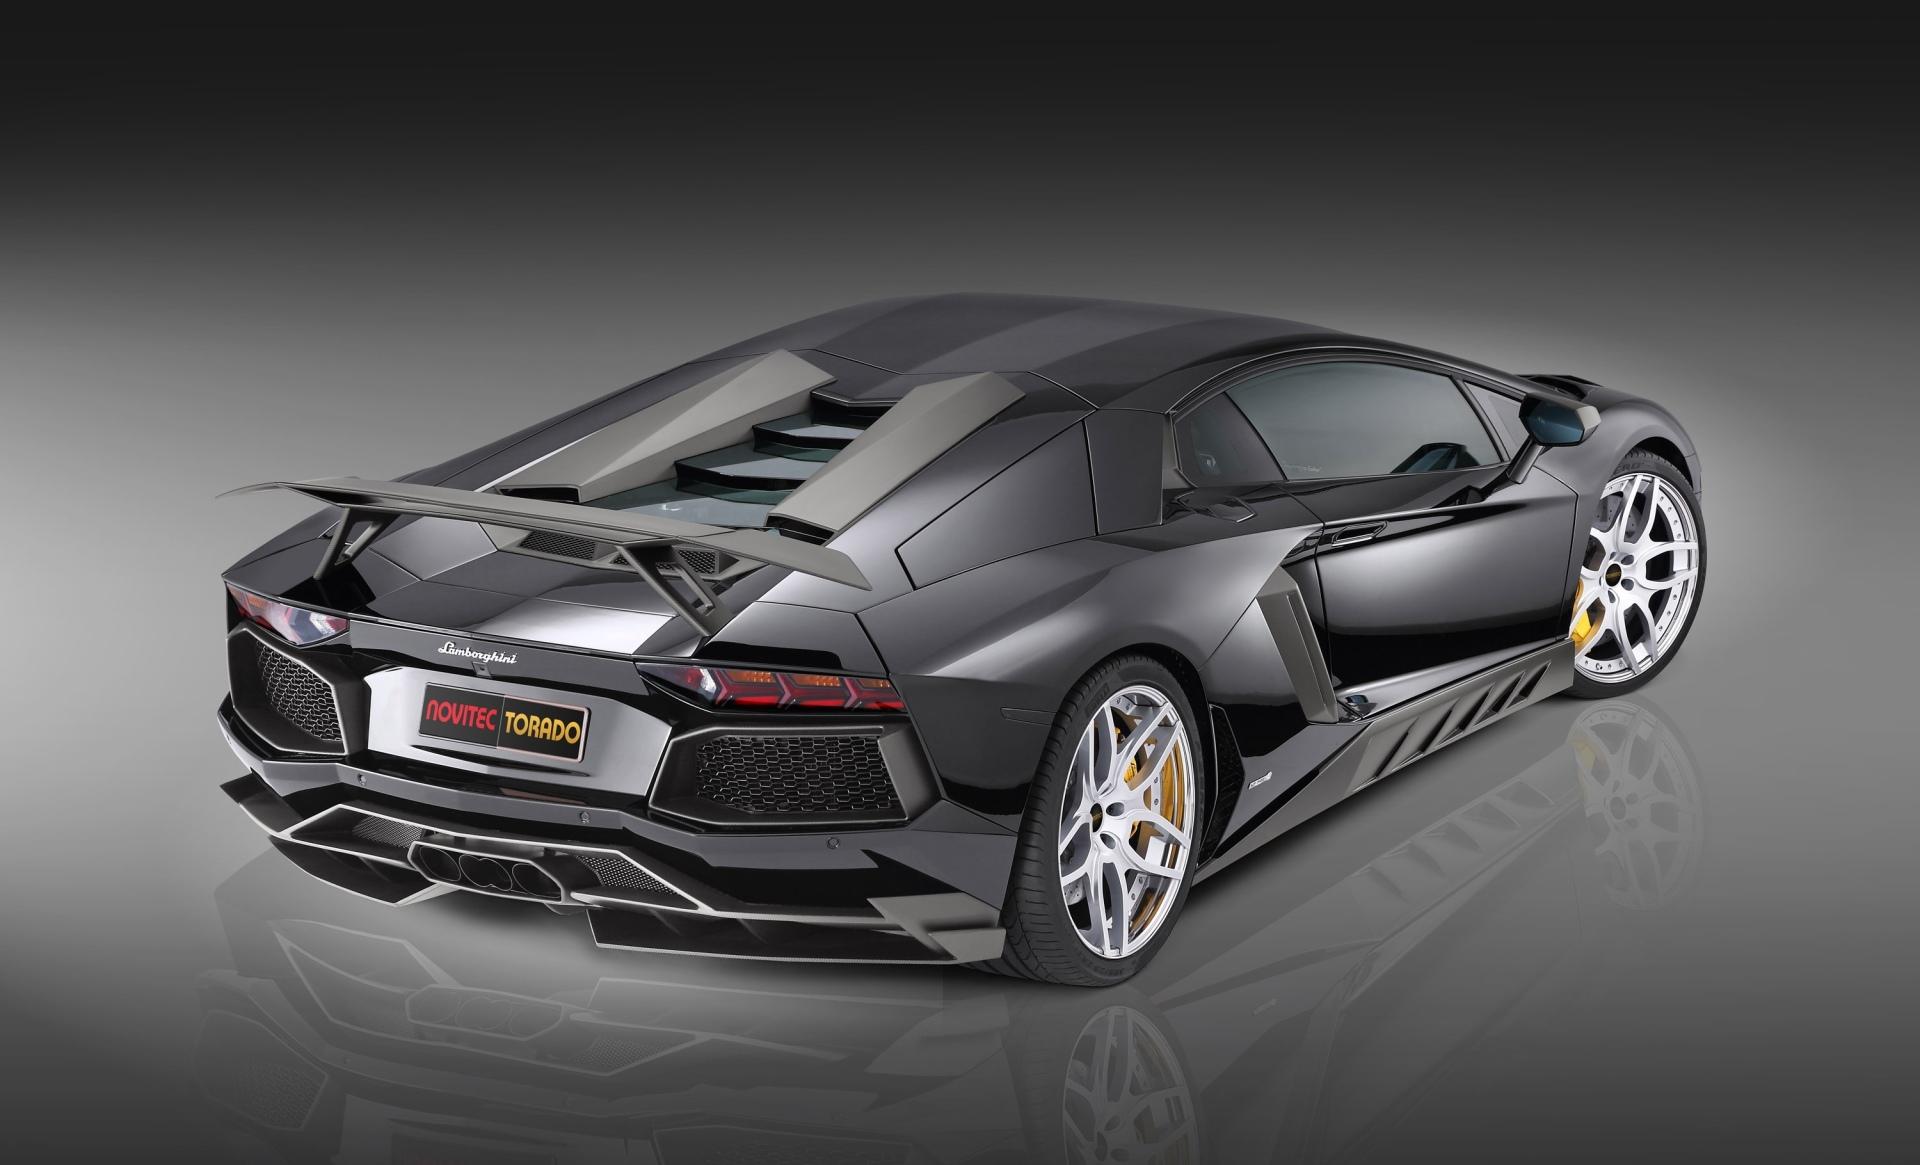 Lamborghini Novitec Torado at 320 x 480 iPhone size wallpapers HD quality